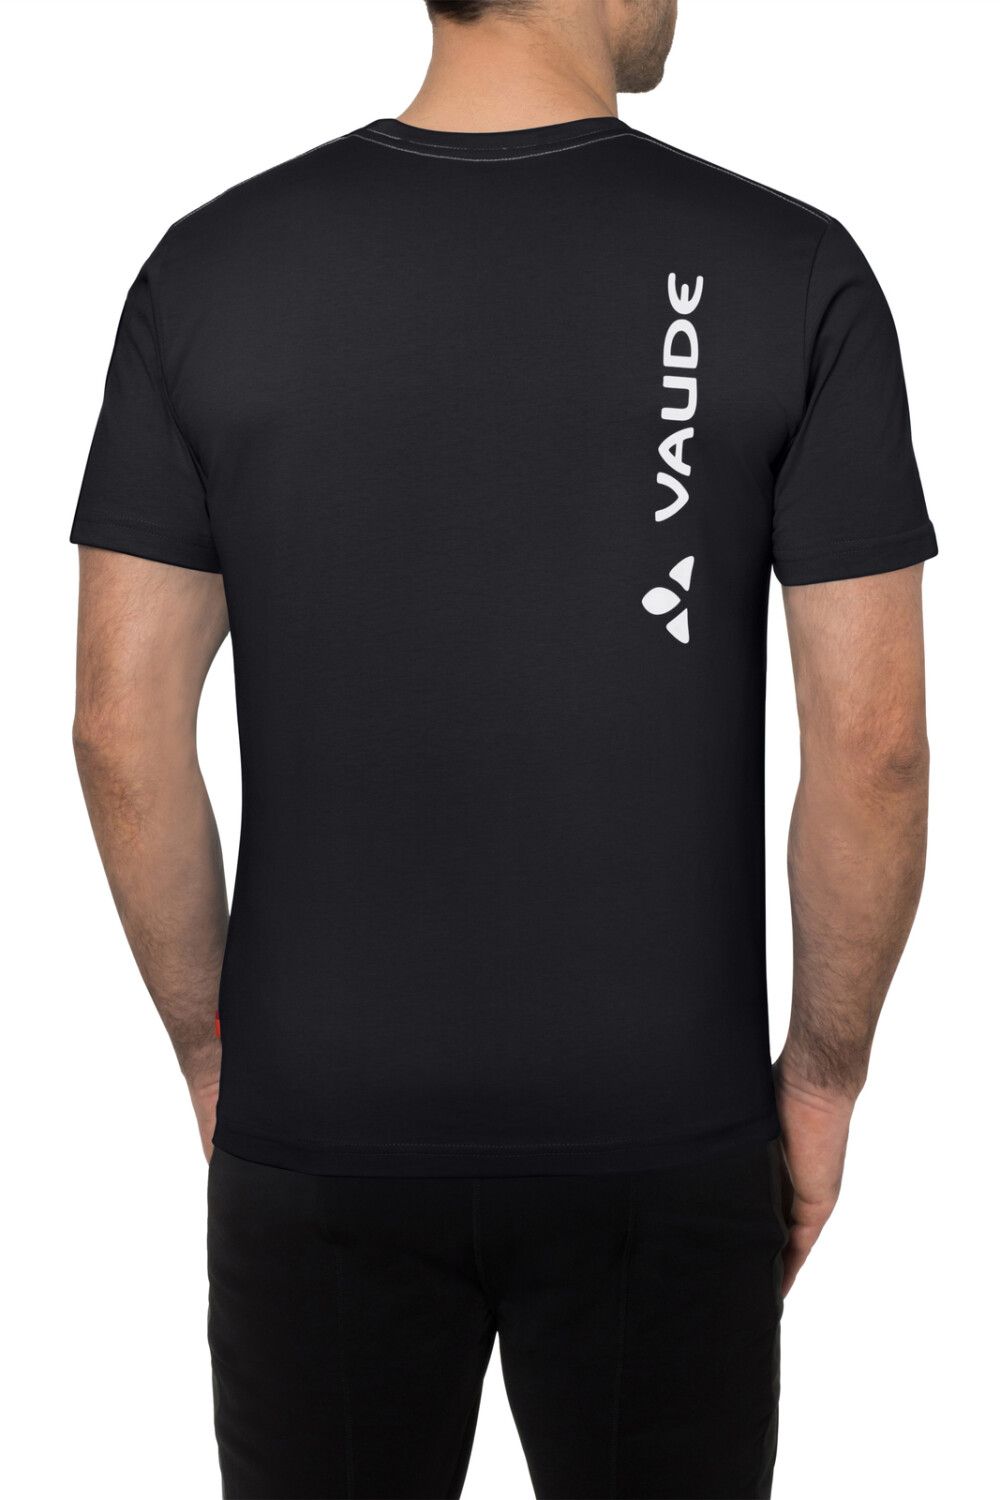 VAUDE Men's Brand T-Shirt (Bild 2)